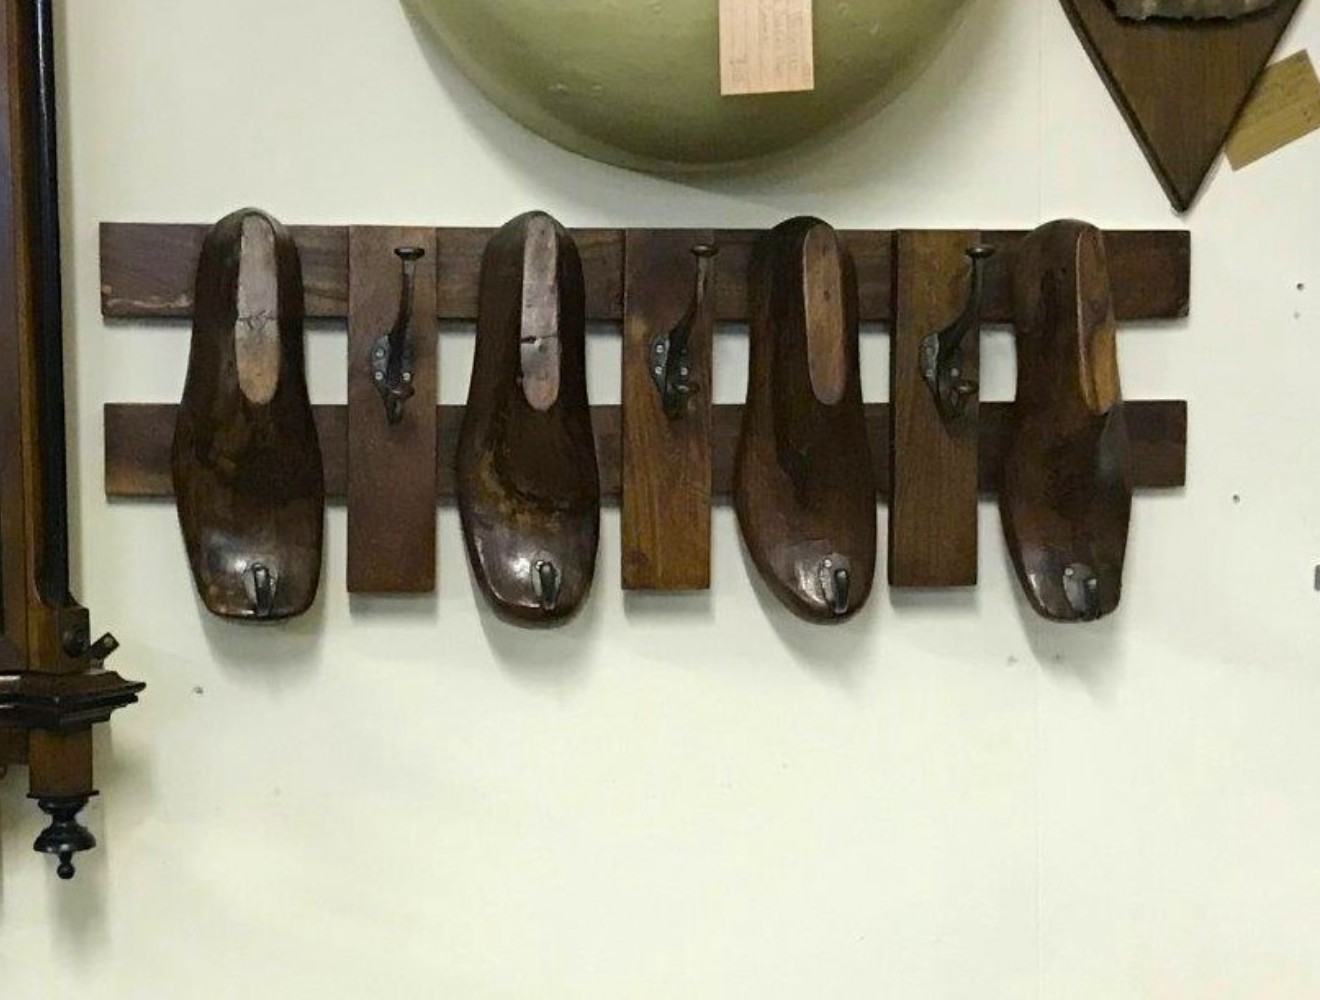 Vintage Wooden Shoe Last Coat Rack Made from Reclaimed Shoe Lasts